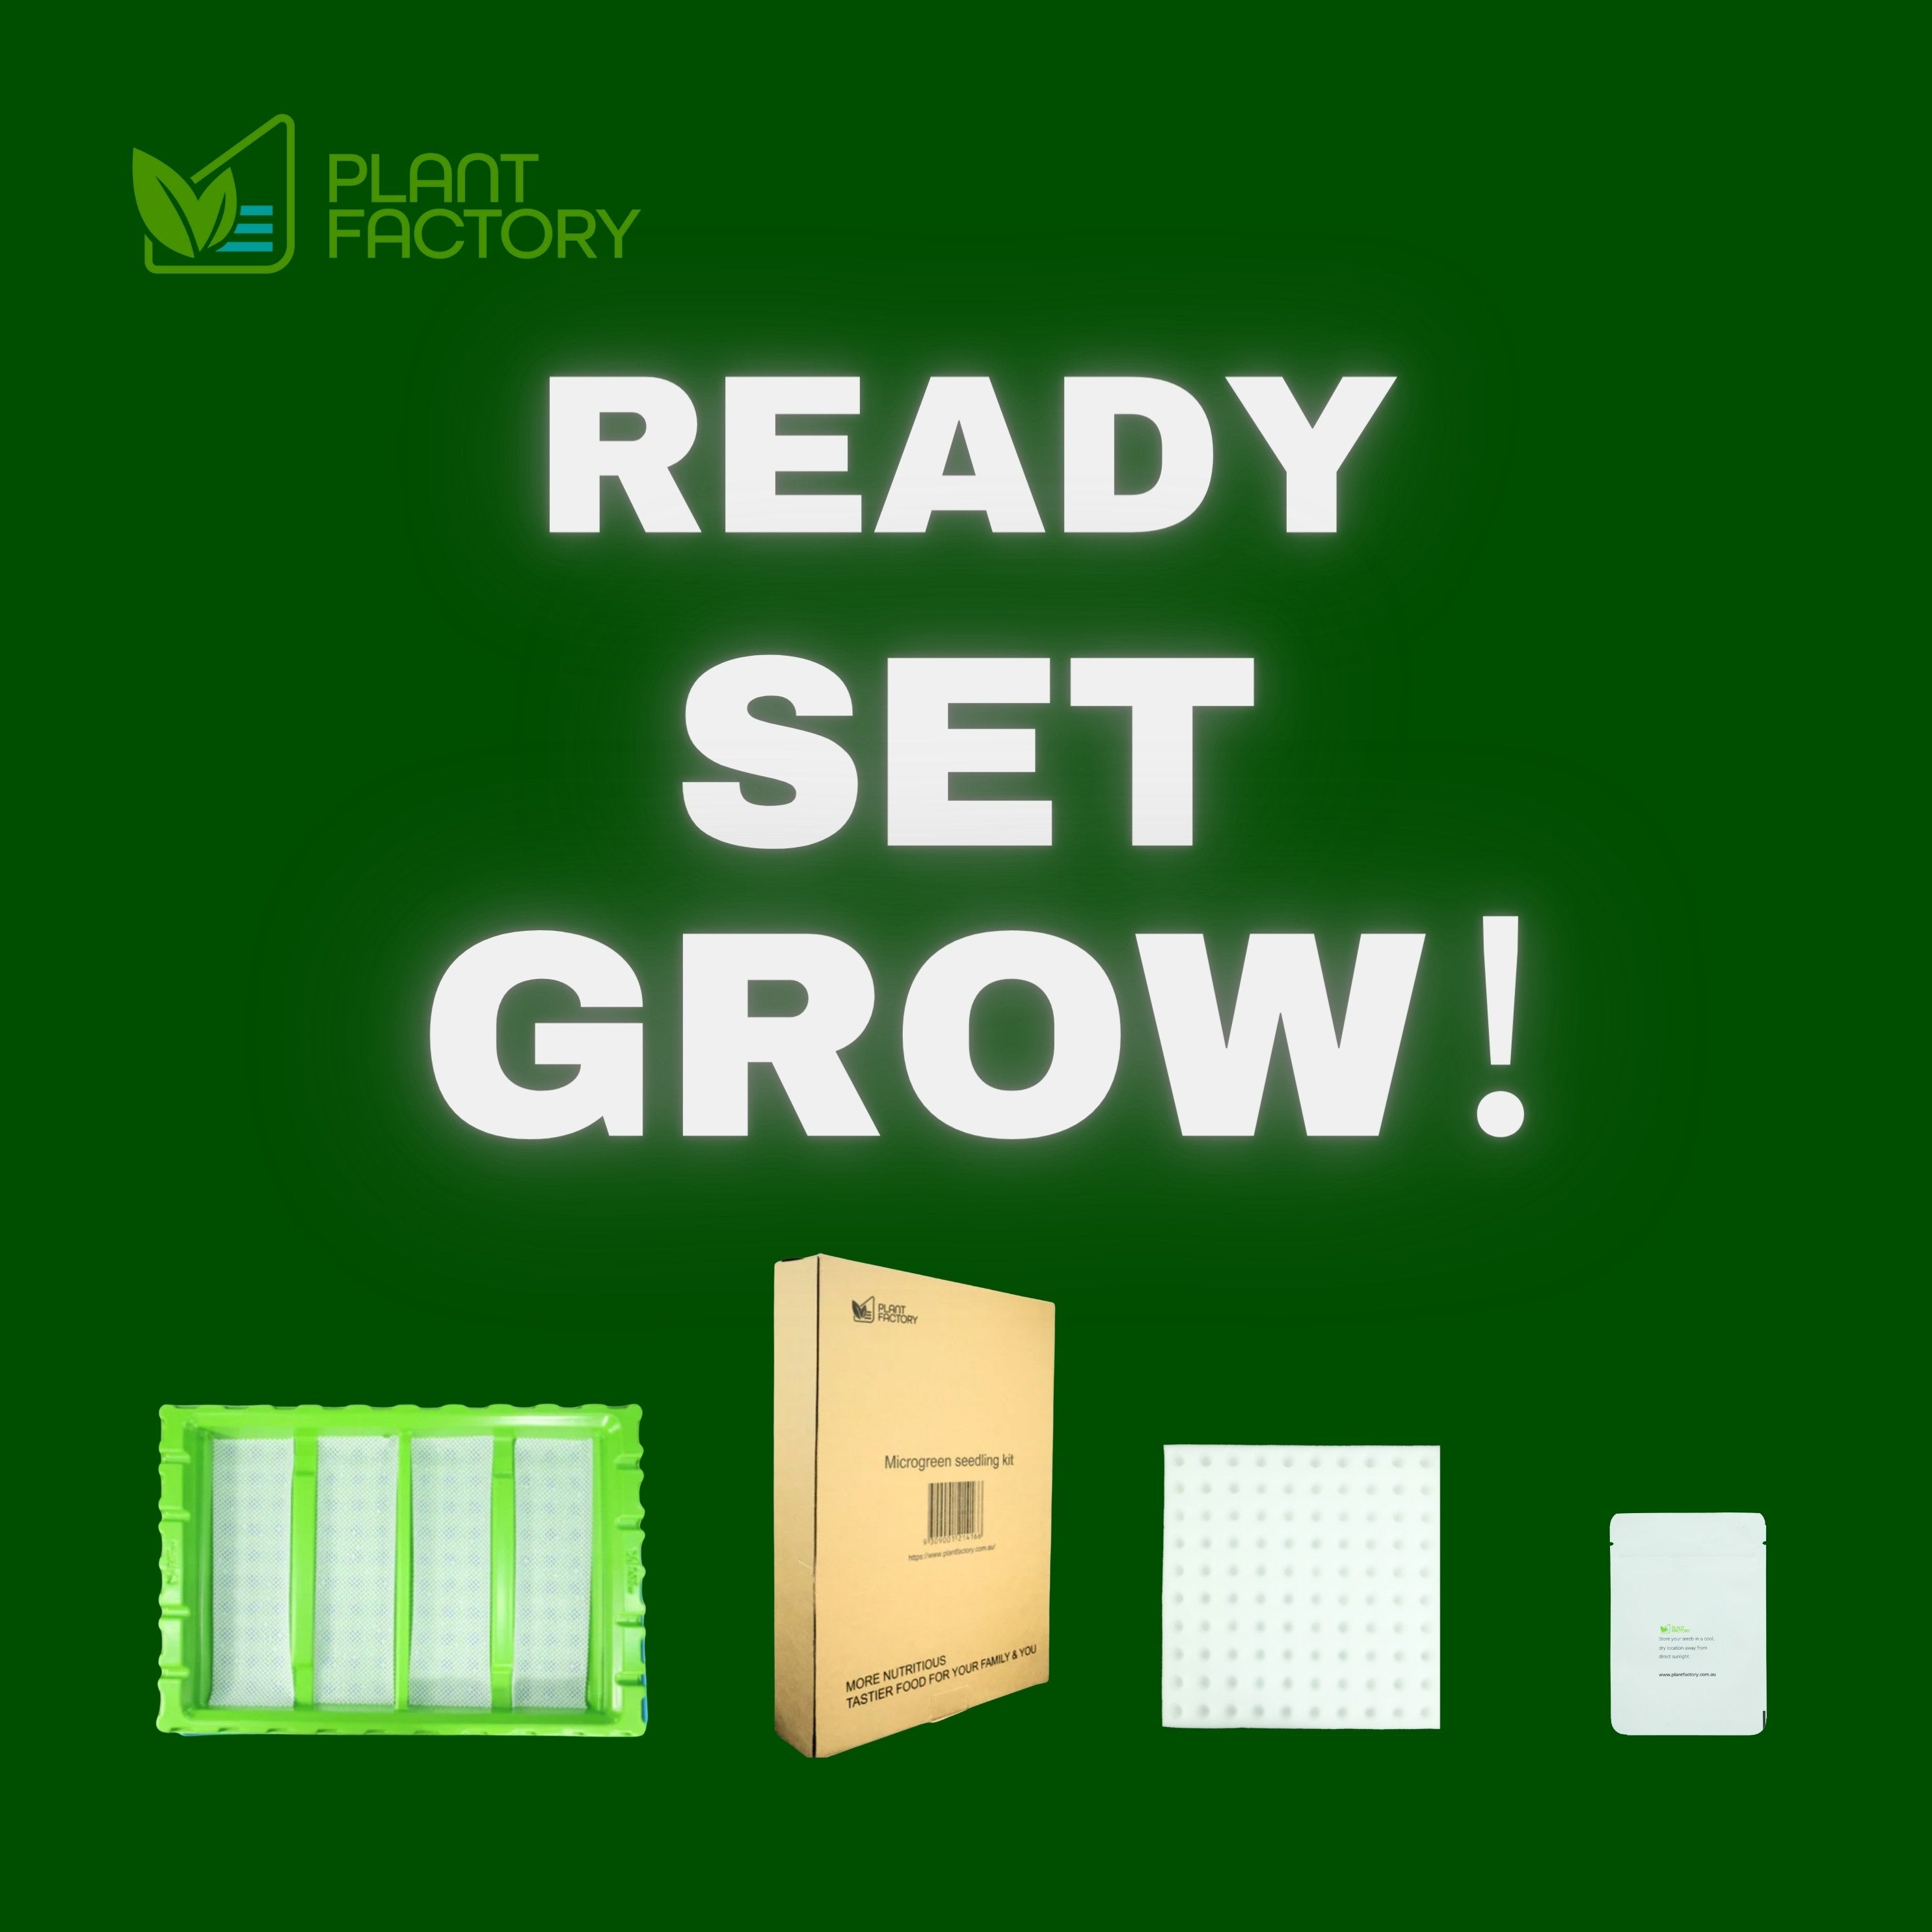 Ready, set, grow! 🌱